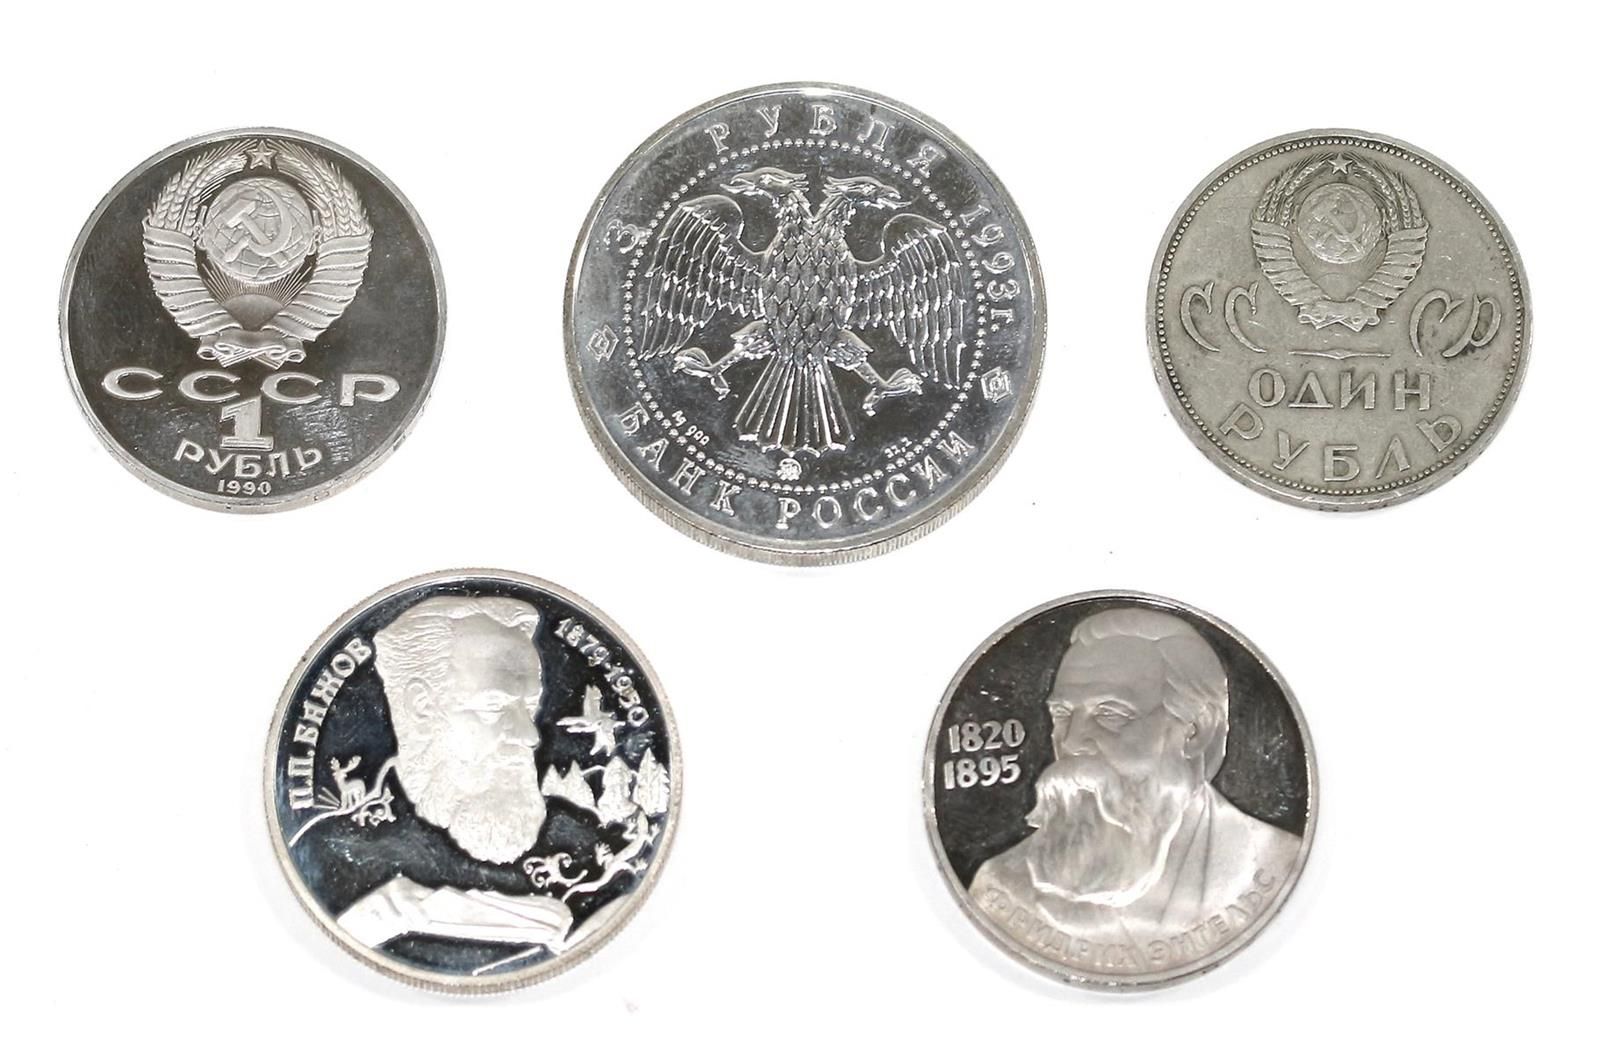 Russland Coin collection over 60 coins, course coins, collector coins etc. Inclu&hellip;